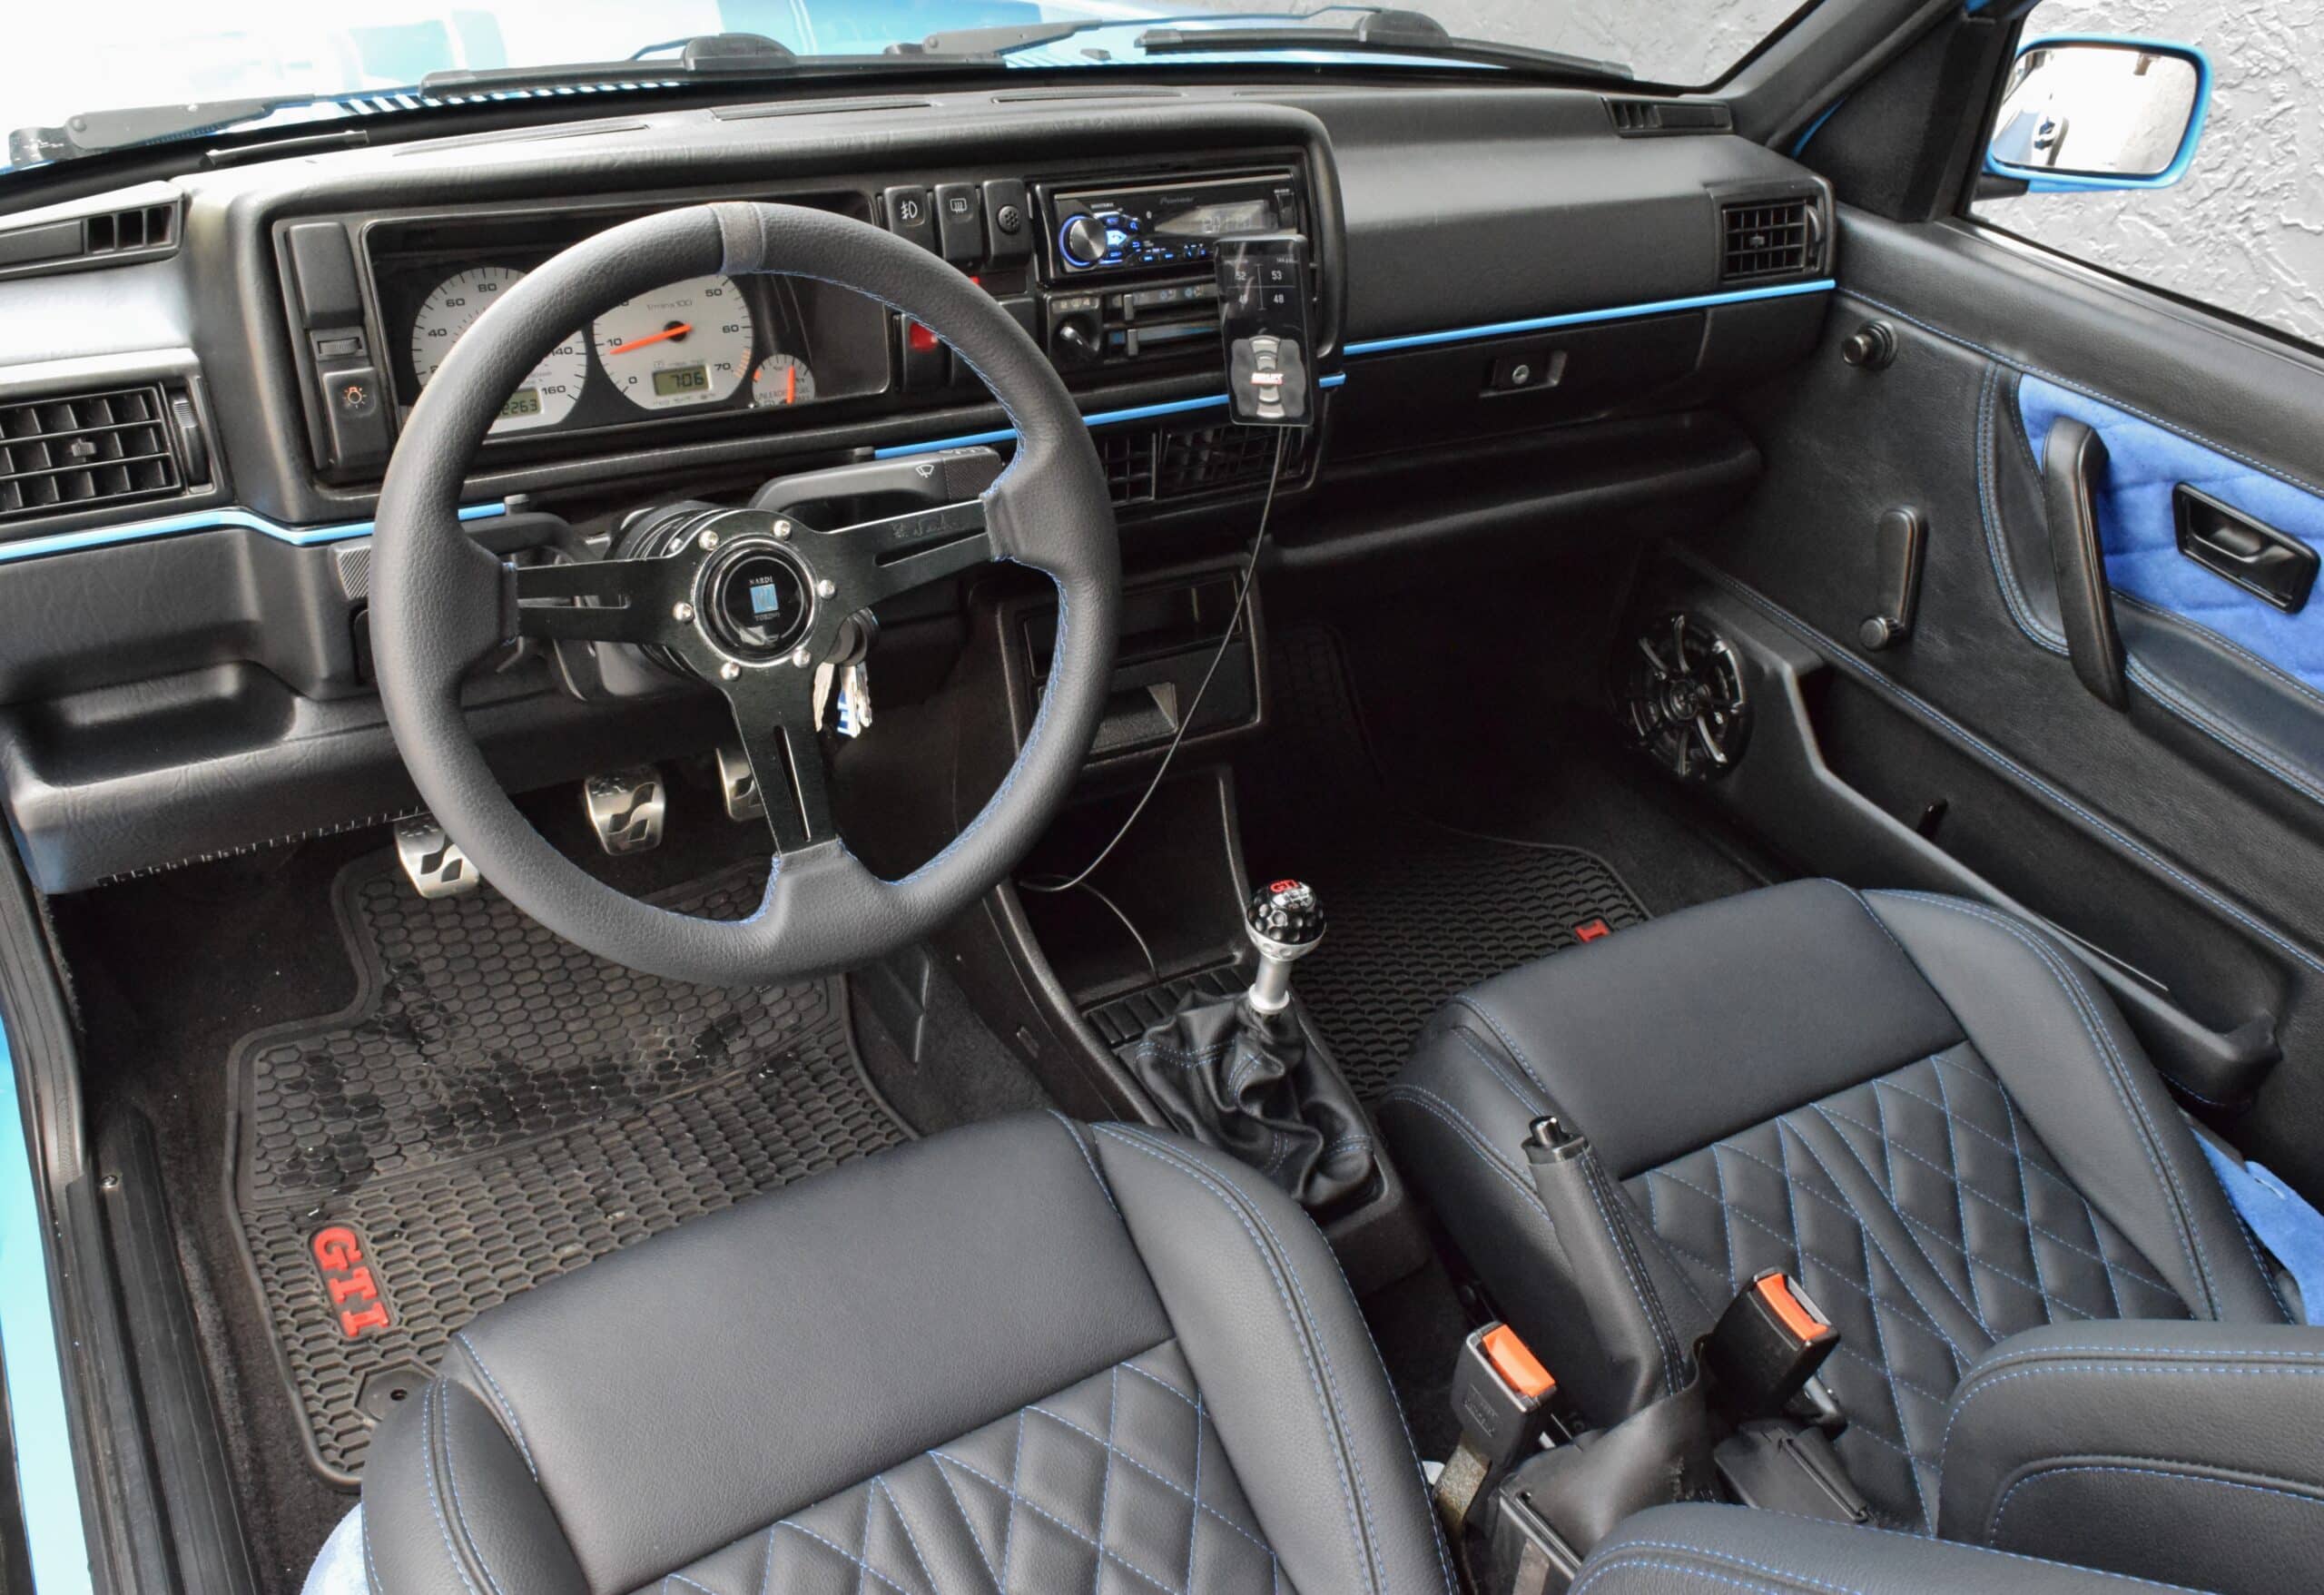 1992 Volkswagen Golf MK2 GTI VR6 SWAP Voodoo Blue Custom Paint-Airlift Suspension-CCW Wheels-Custom Interior-SHOW CAR